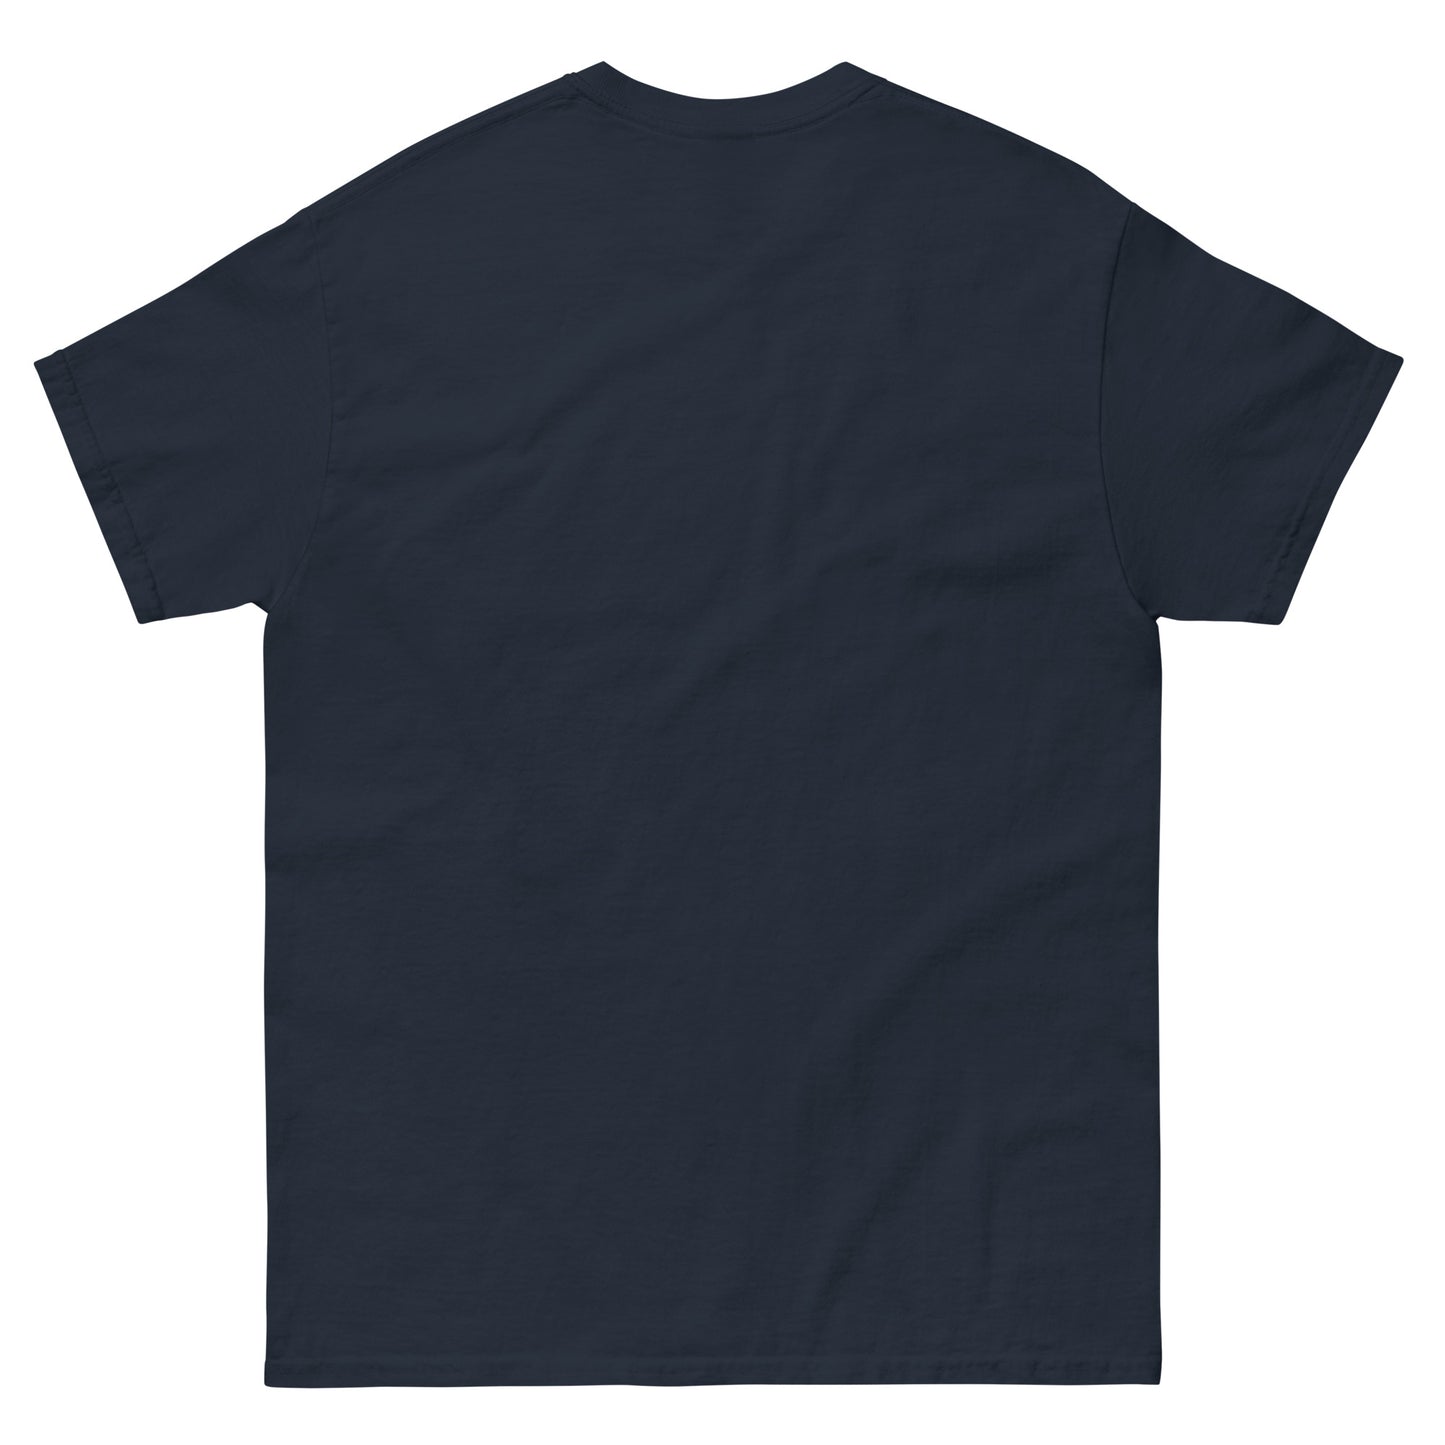 Brady 12 GOAT T-Shirt